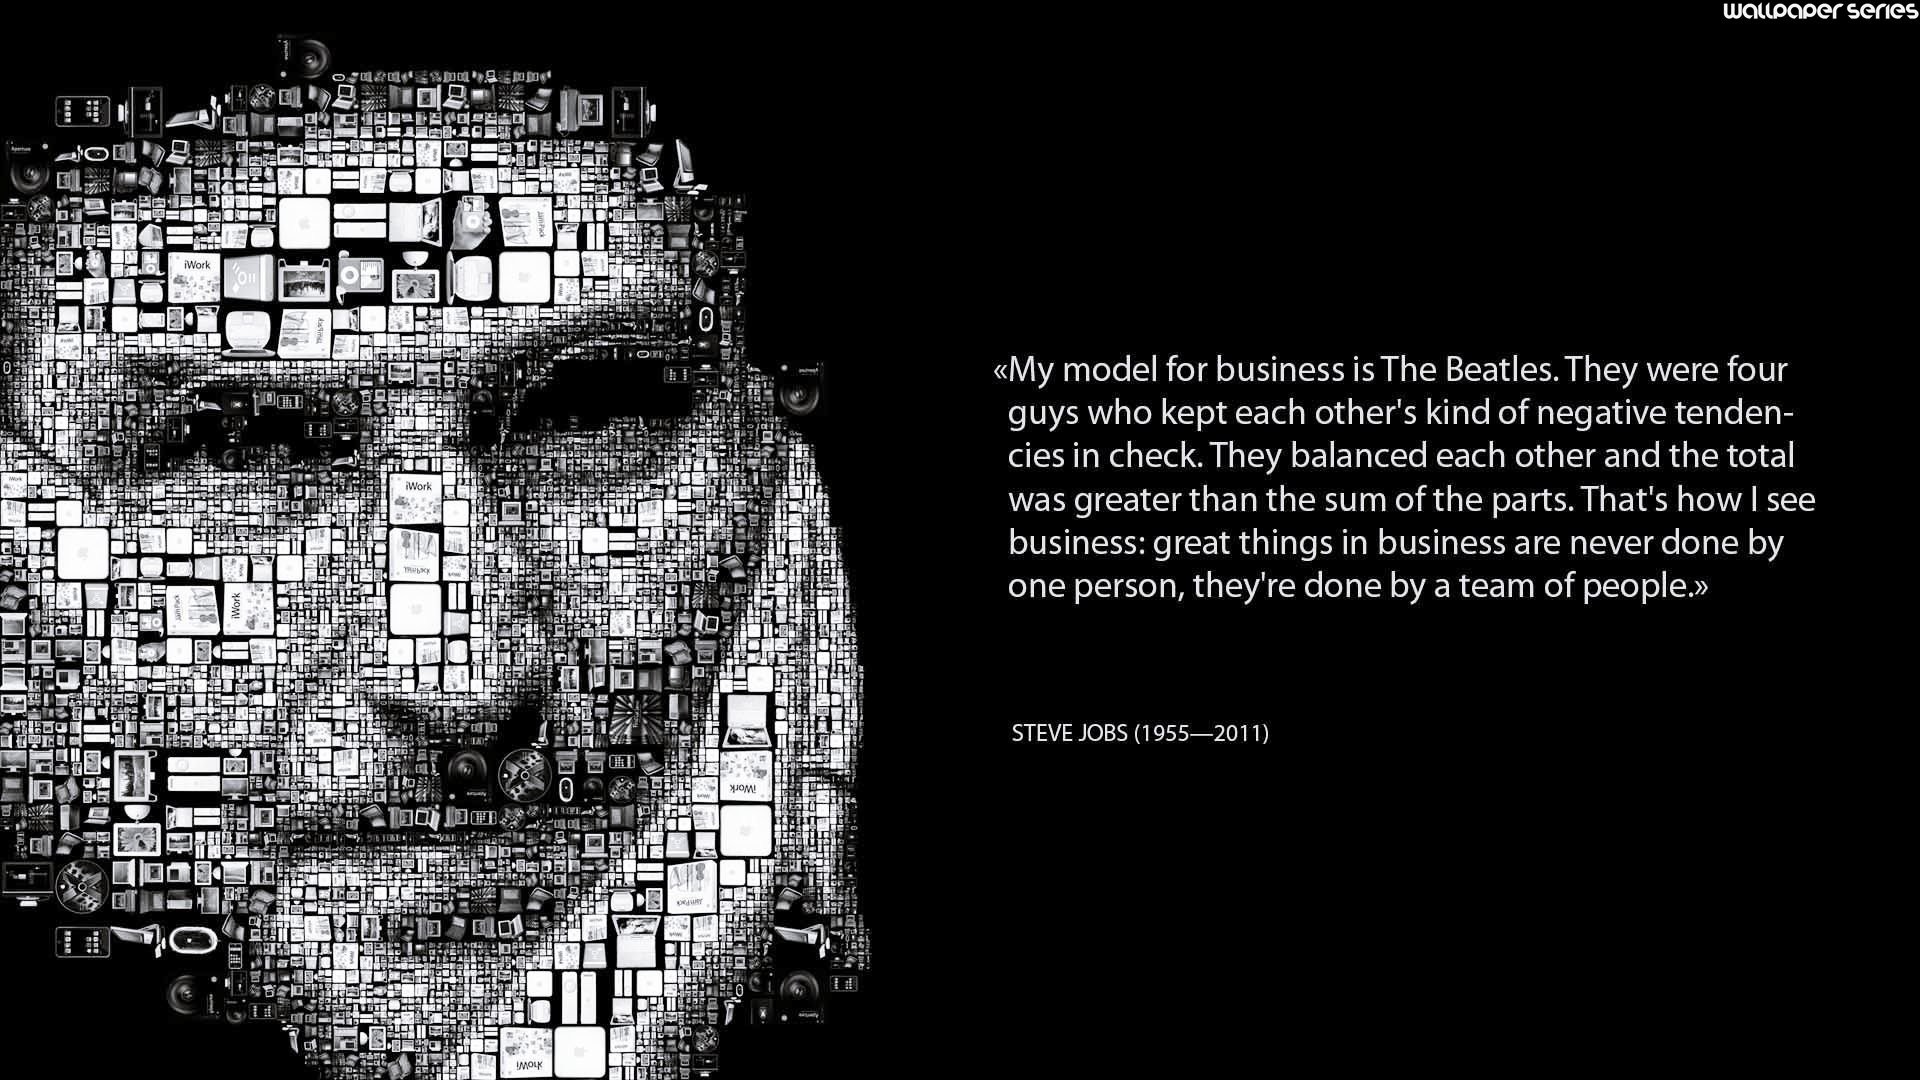 Steve Jobs Business Model Quotes Wallpaper 05857